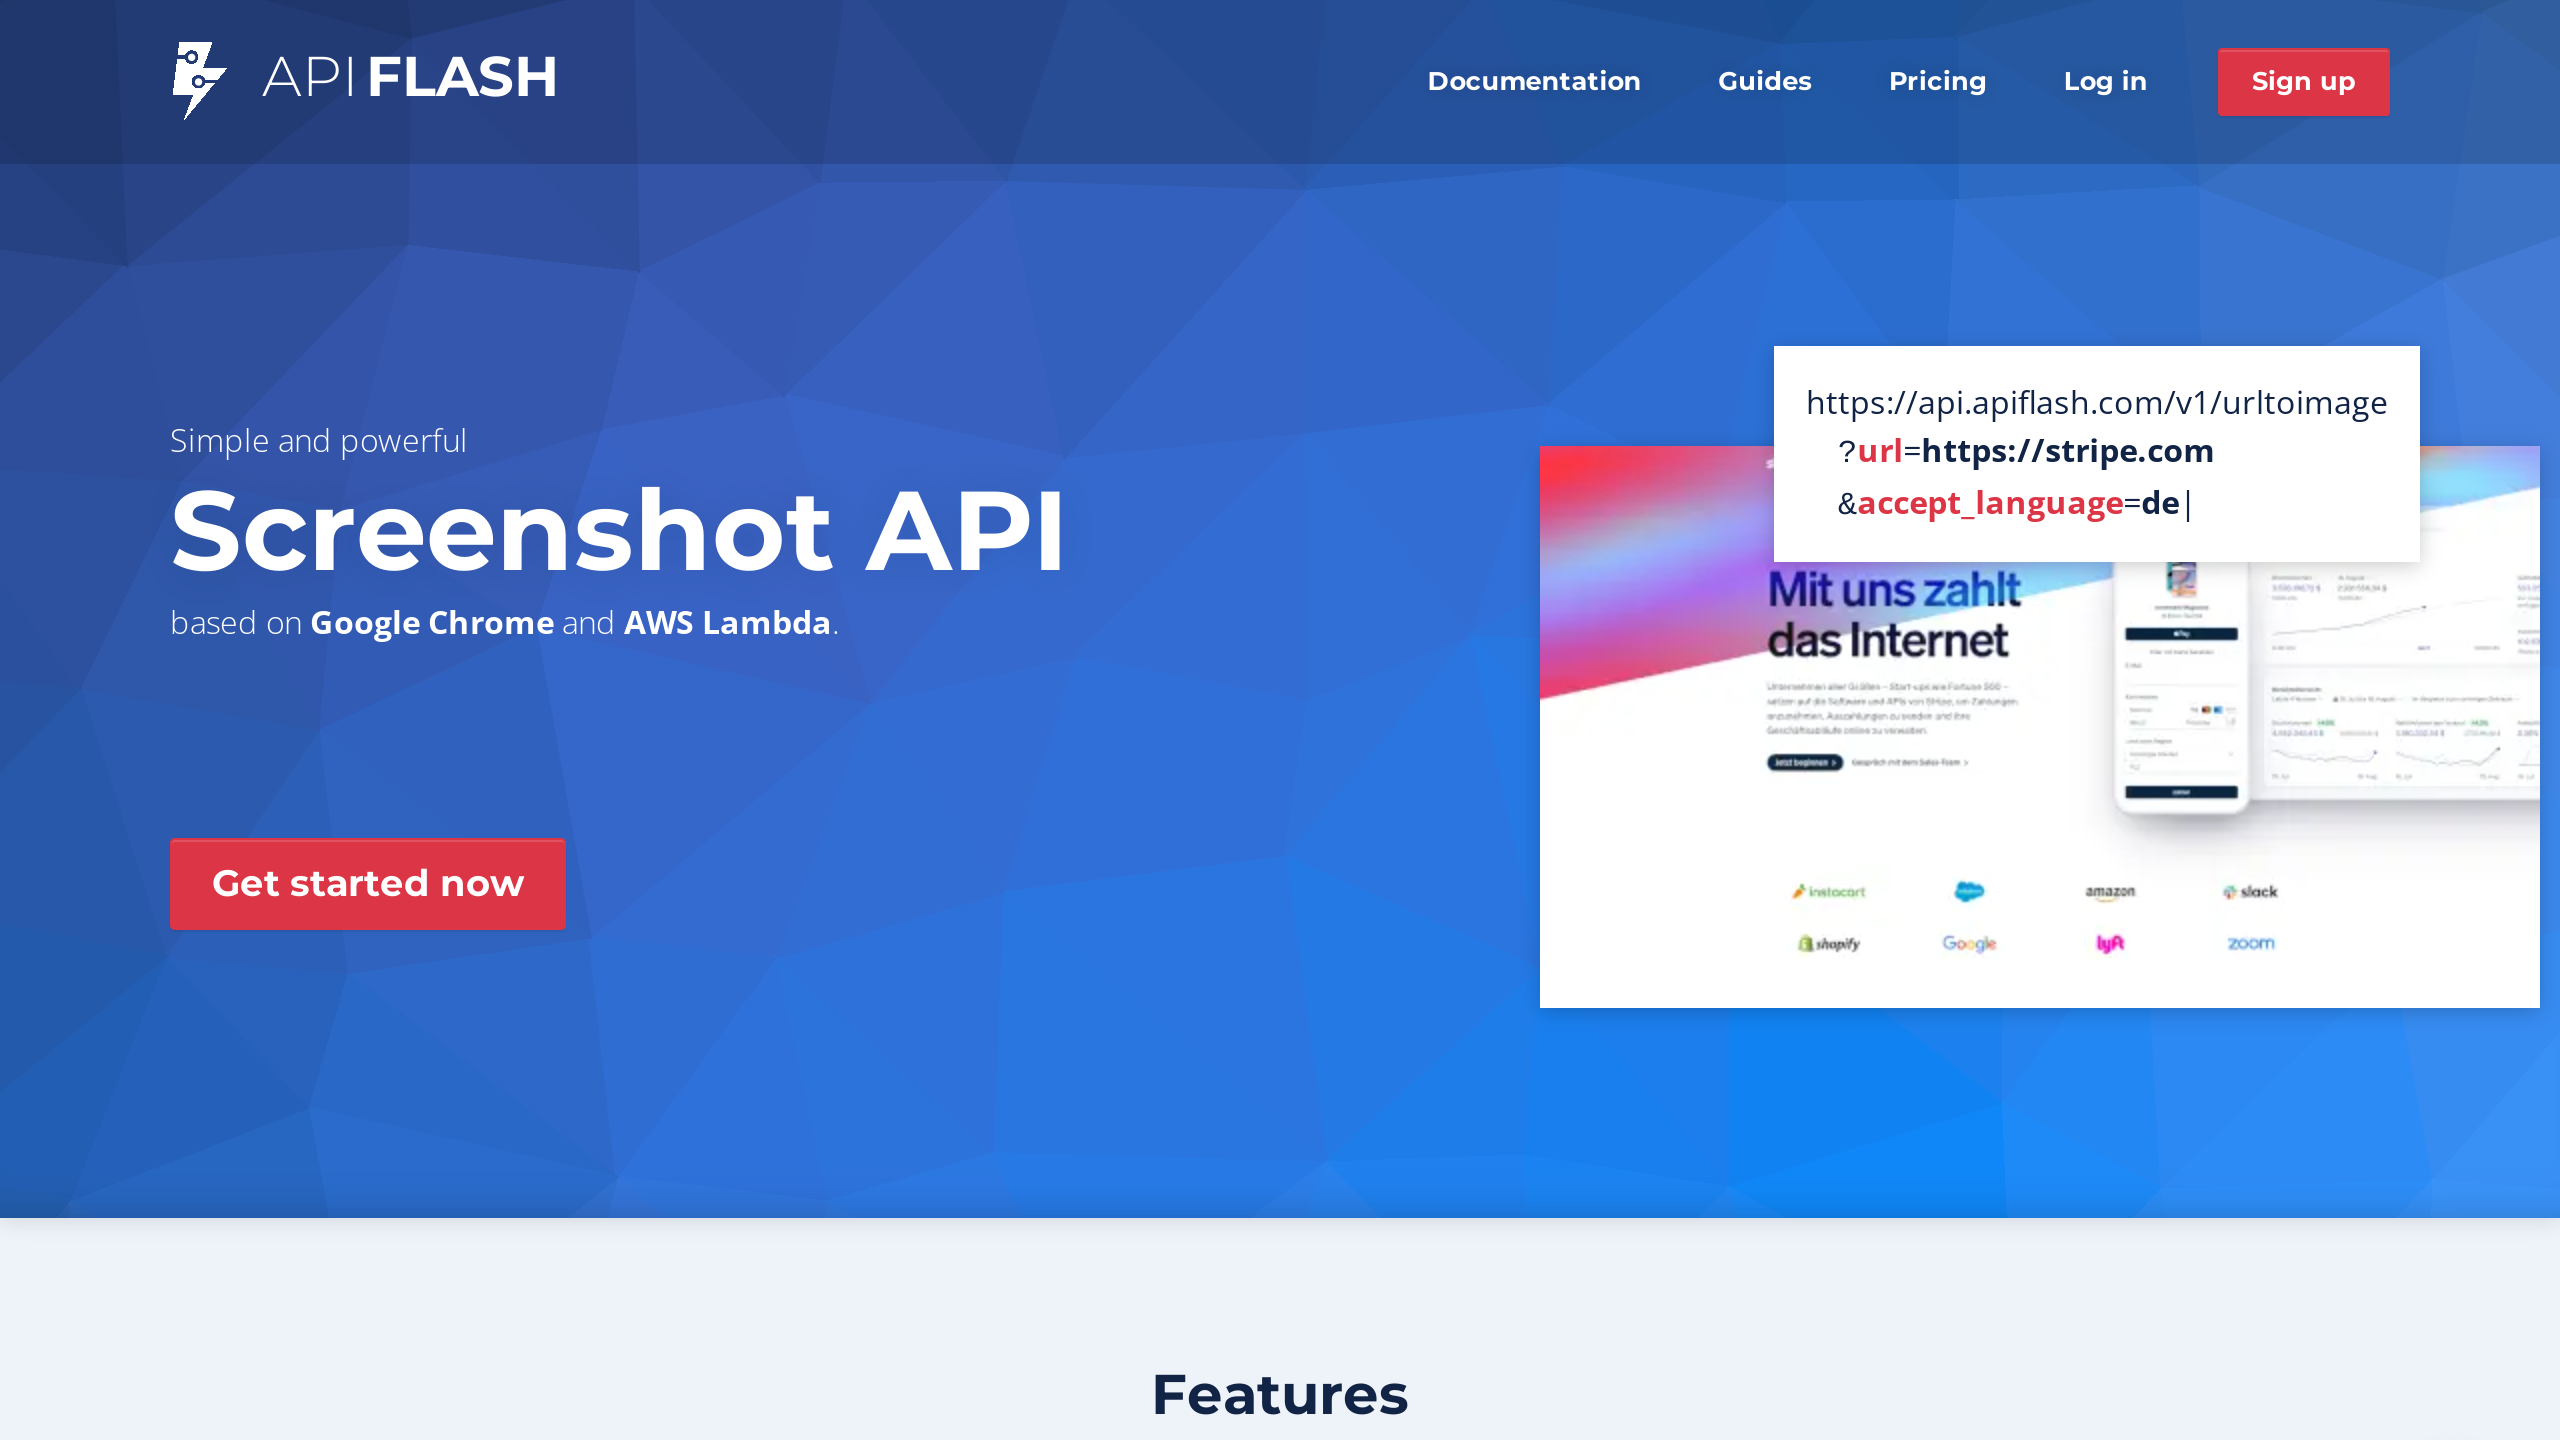 ApiFlash's website screenshot